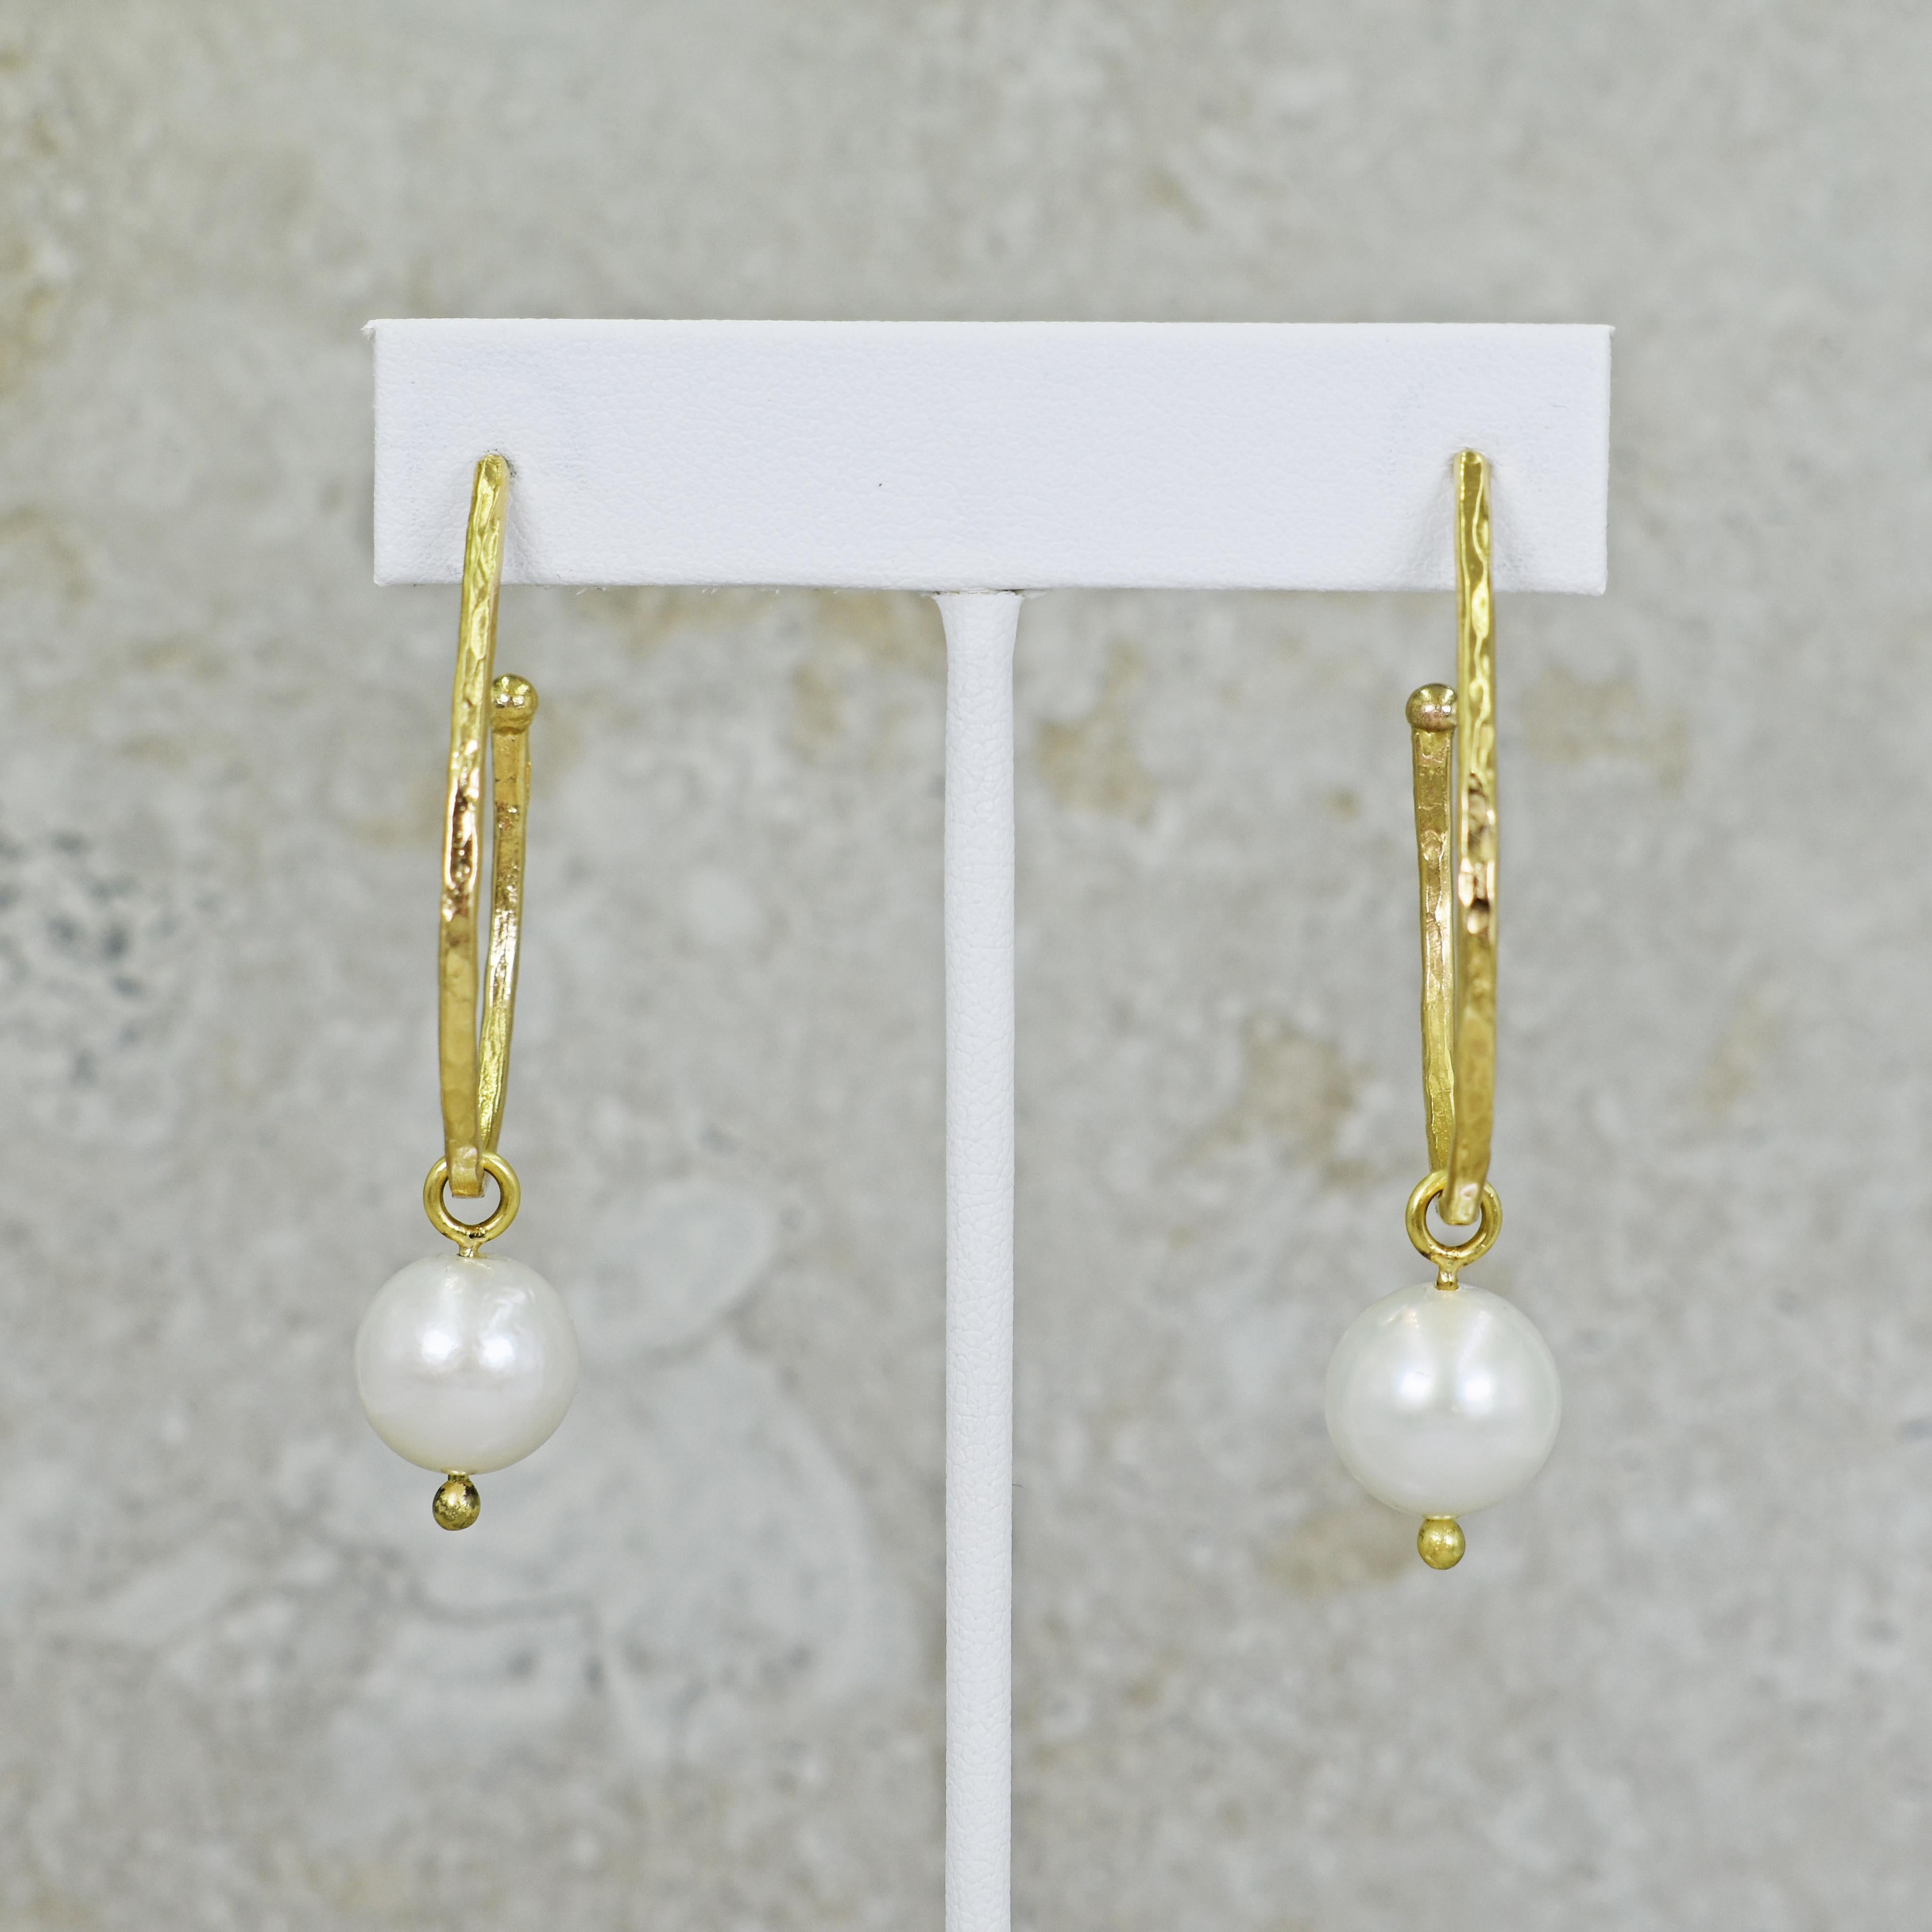 gold hoop earrings with pearl charm